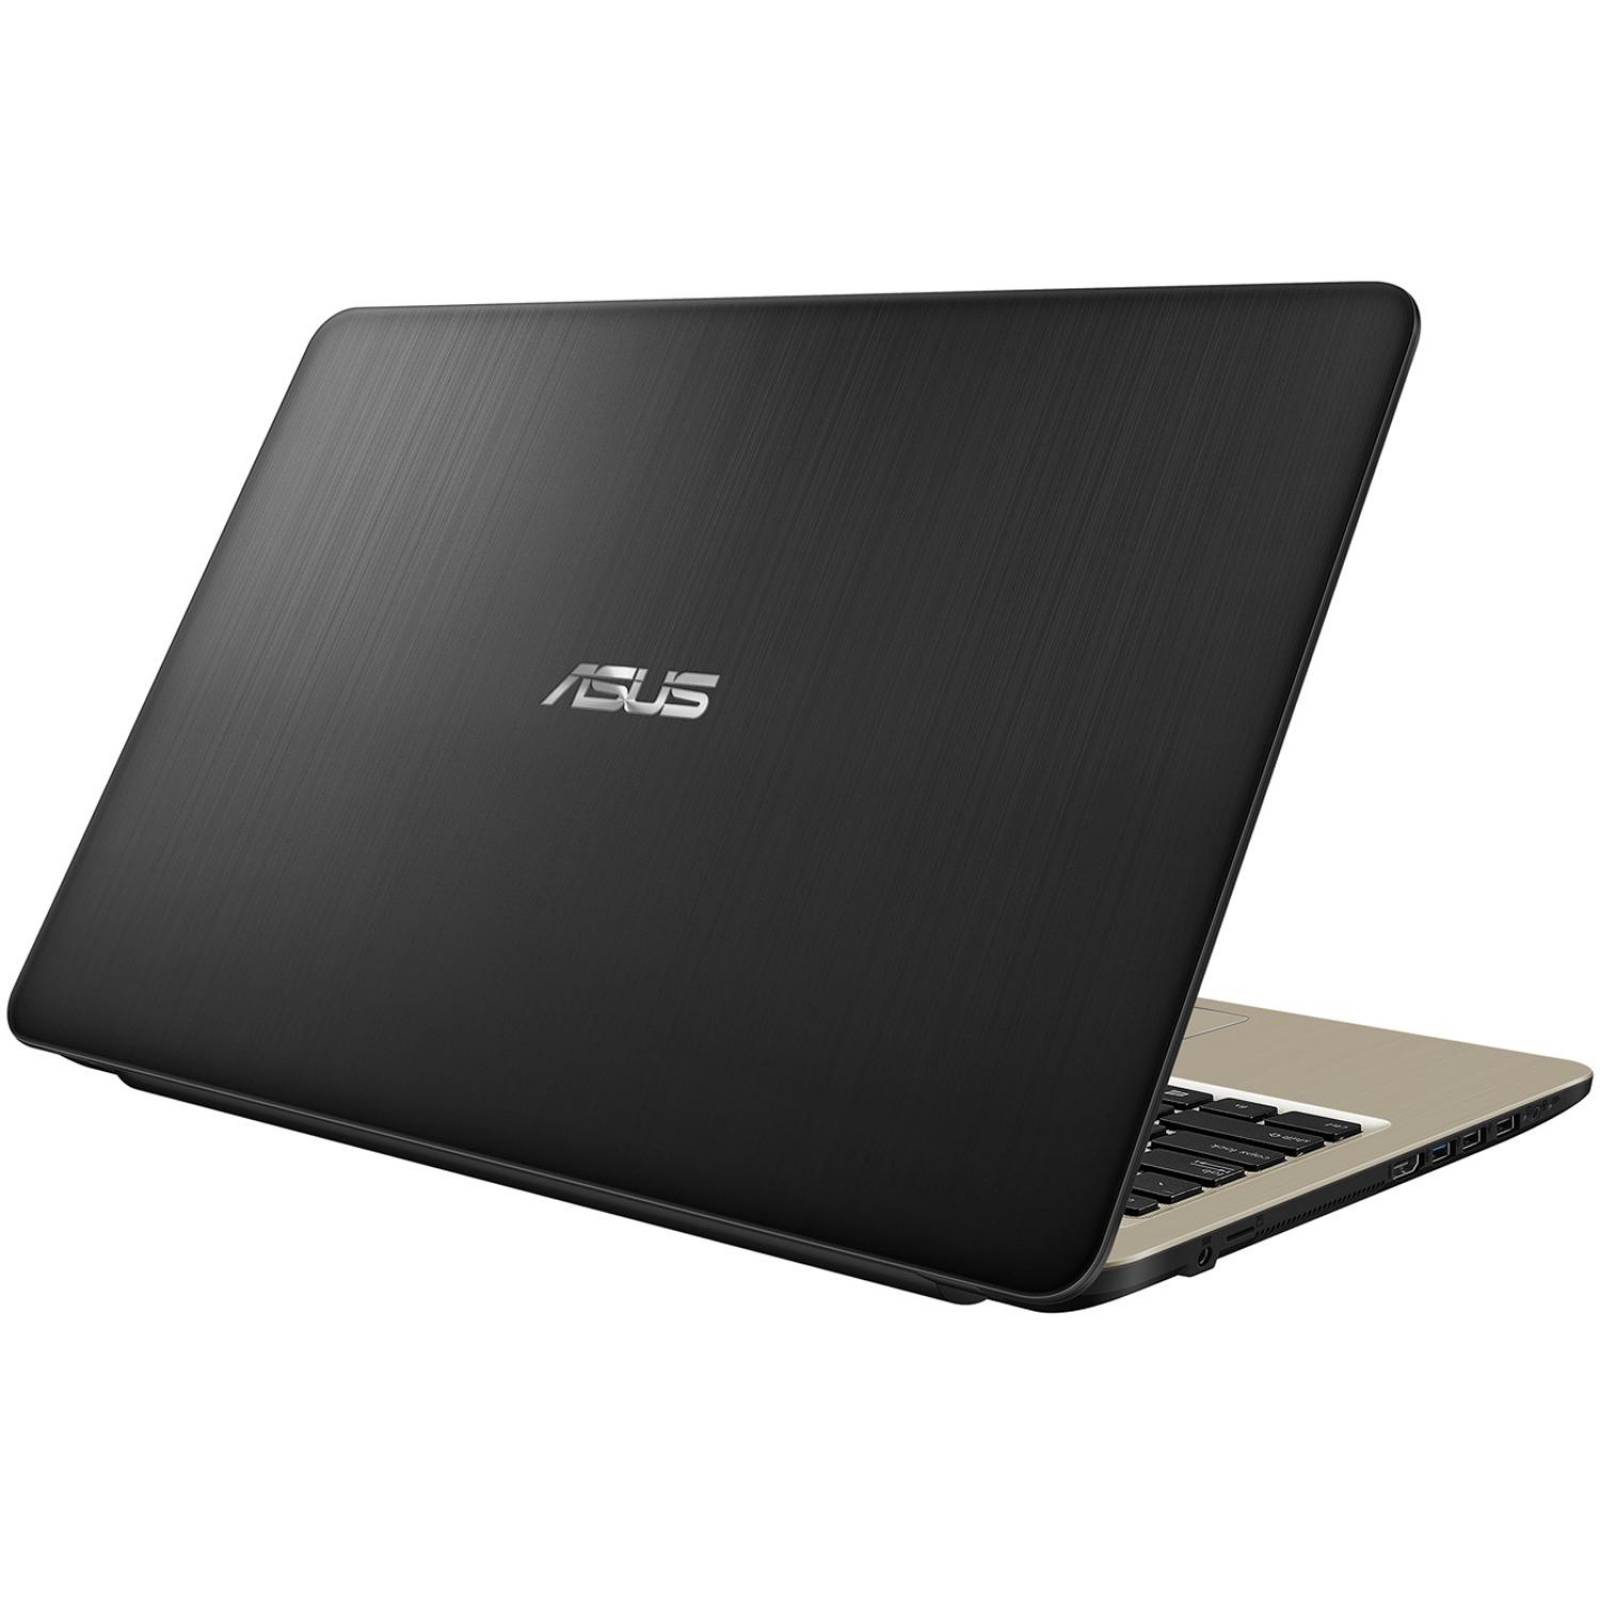 Laptop ASUS Vivobook Intel Dual Core N3350 4GB 500GB Pantalla 15.6 WIFI 